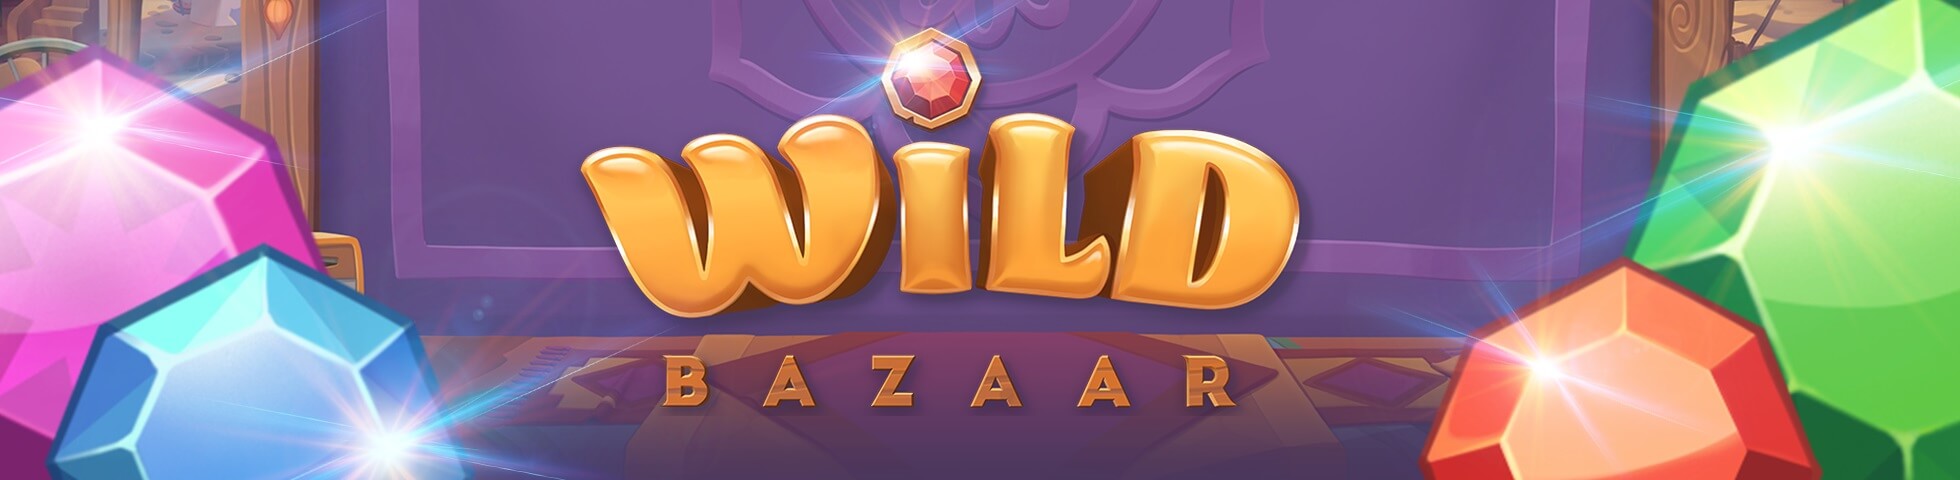 wild bazaar slot review all gambling sites